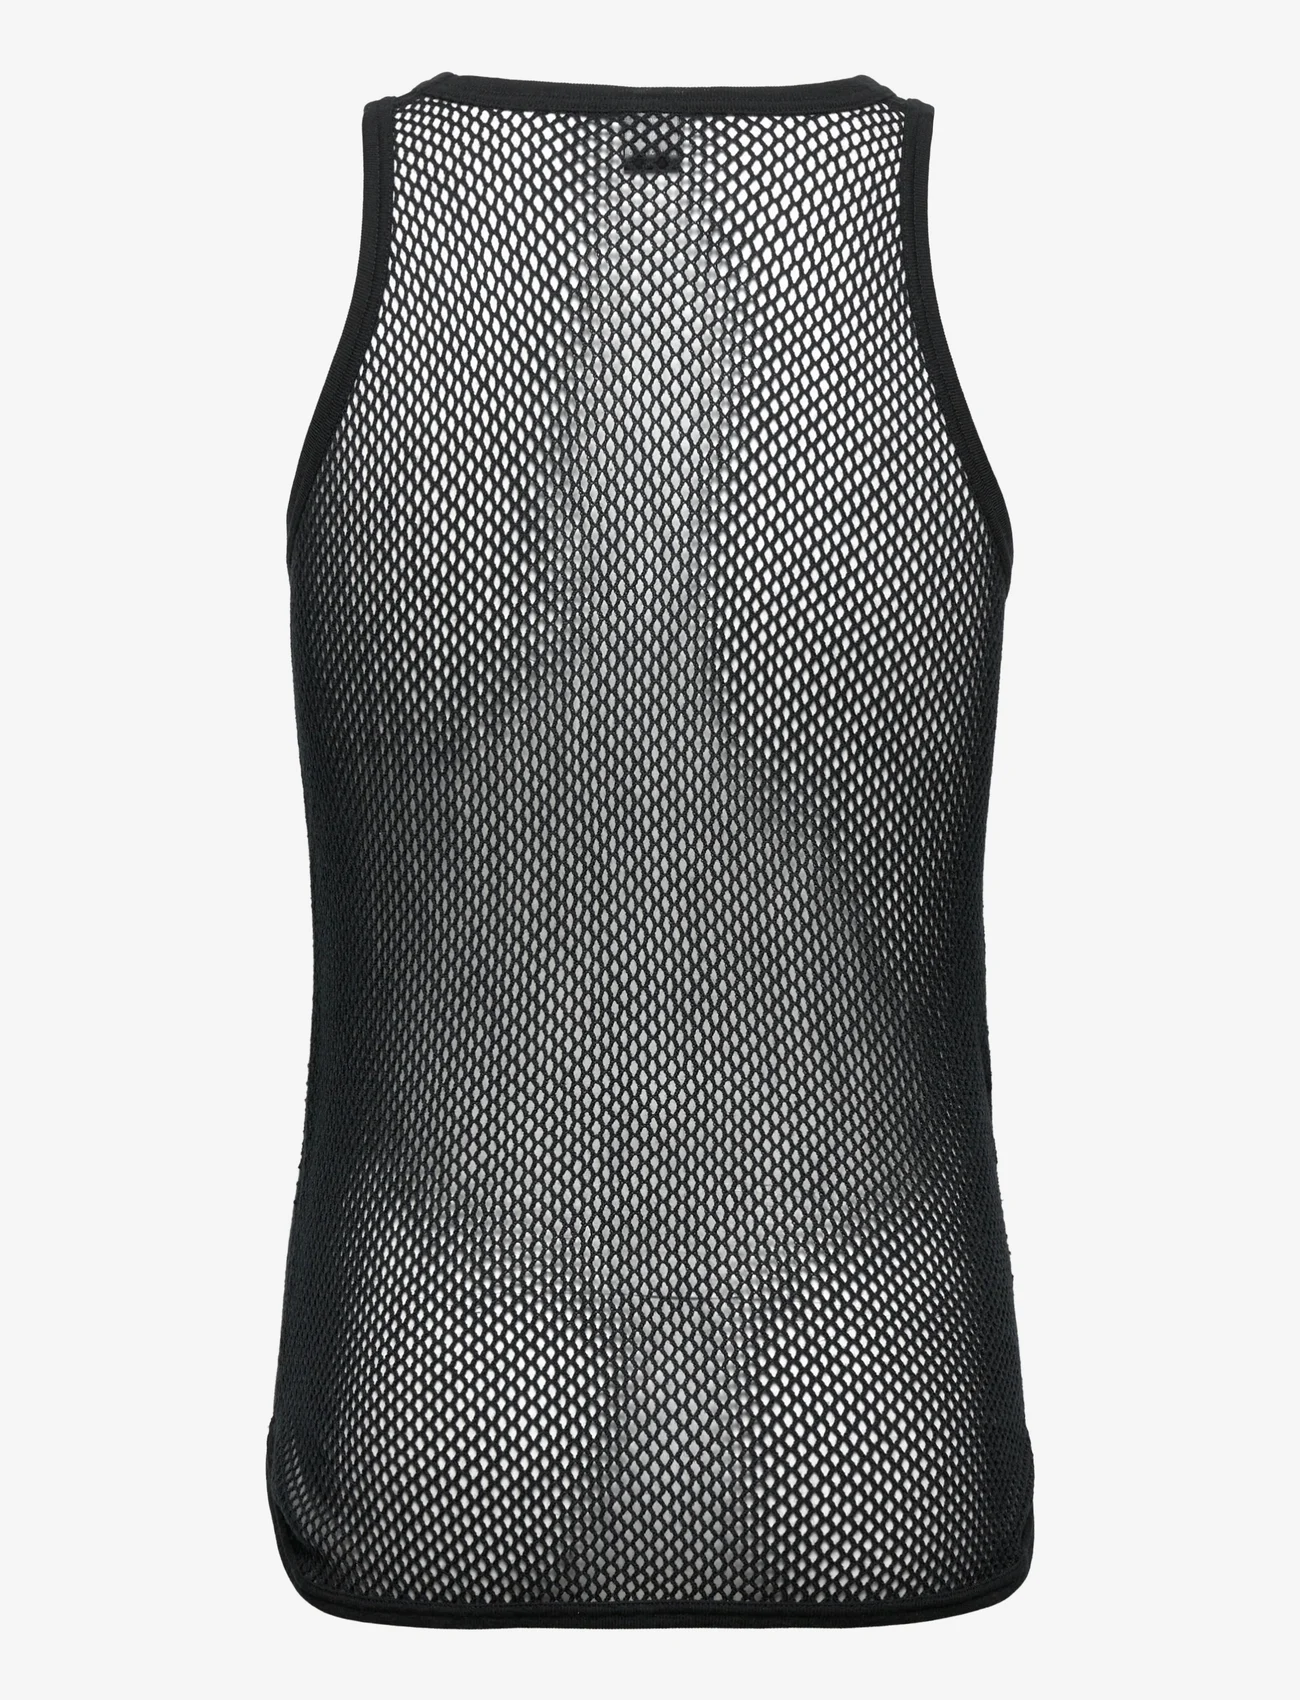 Dovre - DOVRE wool mesh tank top - pyjama tops - black - 1